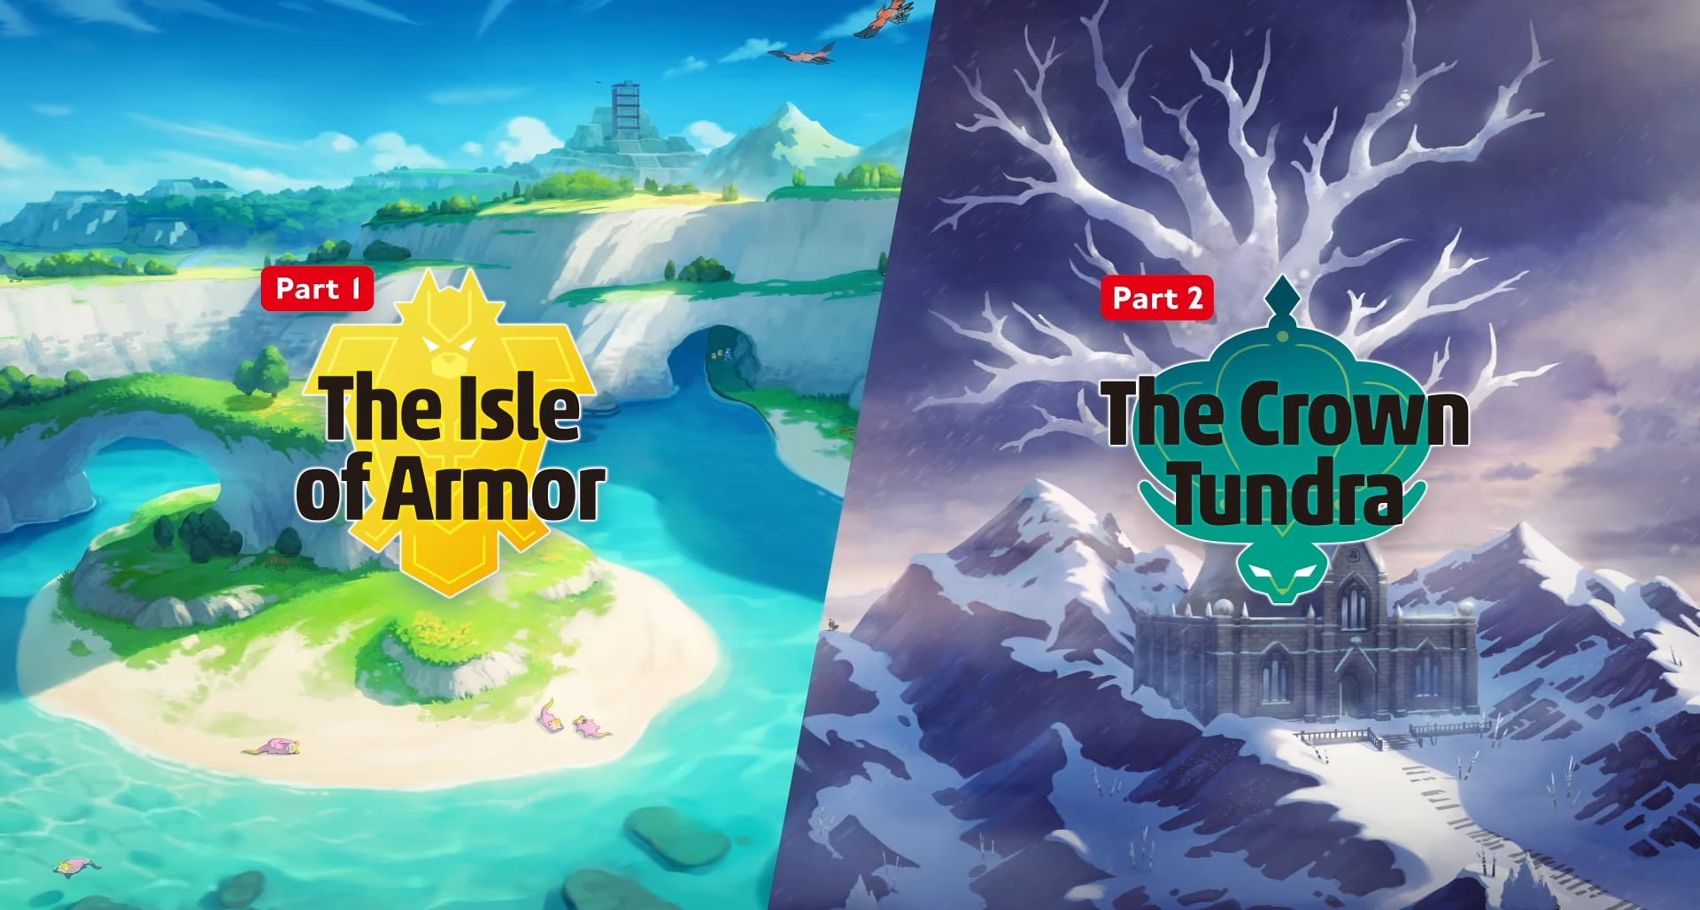 Pokémon Sword & Shield: The Crown Tundra Preview - Pokémon Sword